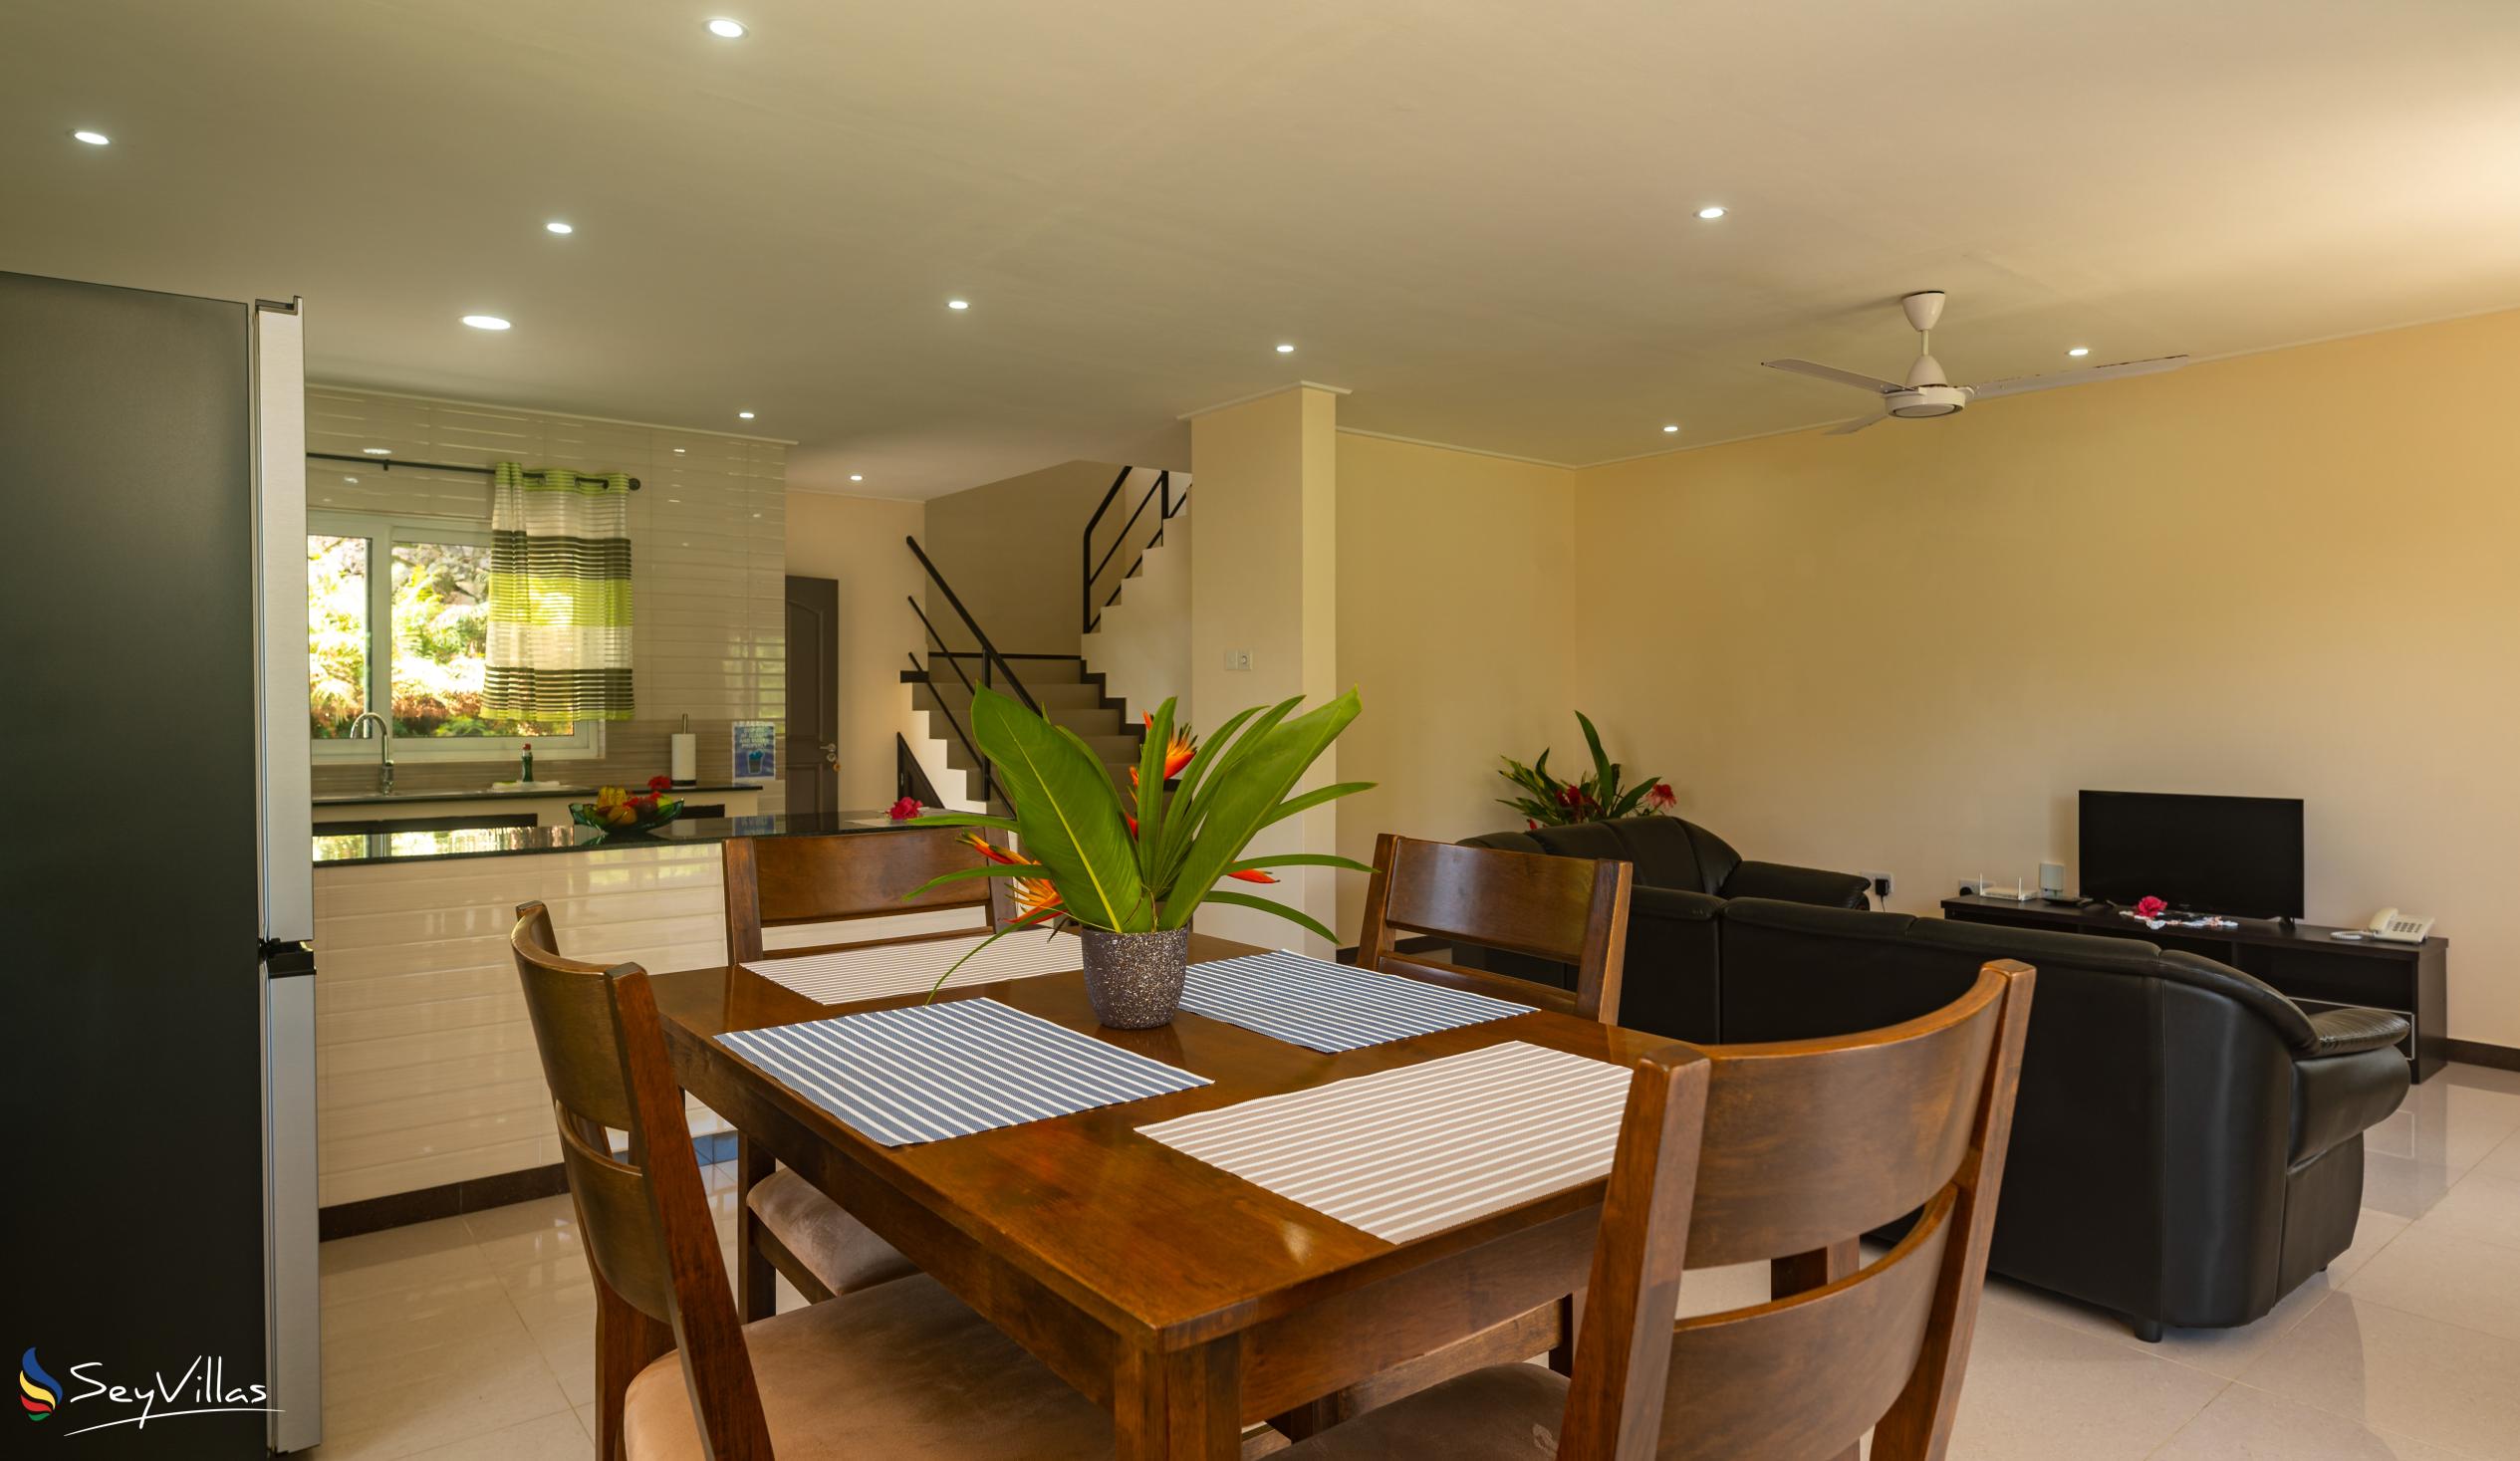 Foto 42: JAIDSS Holiday Apartments - Appartamento con 2 camere - Mahé (Seychelles)